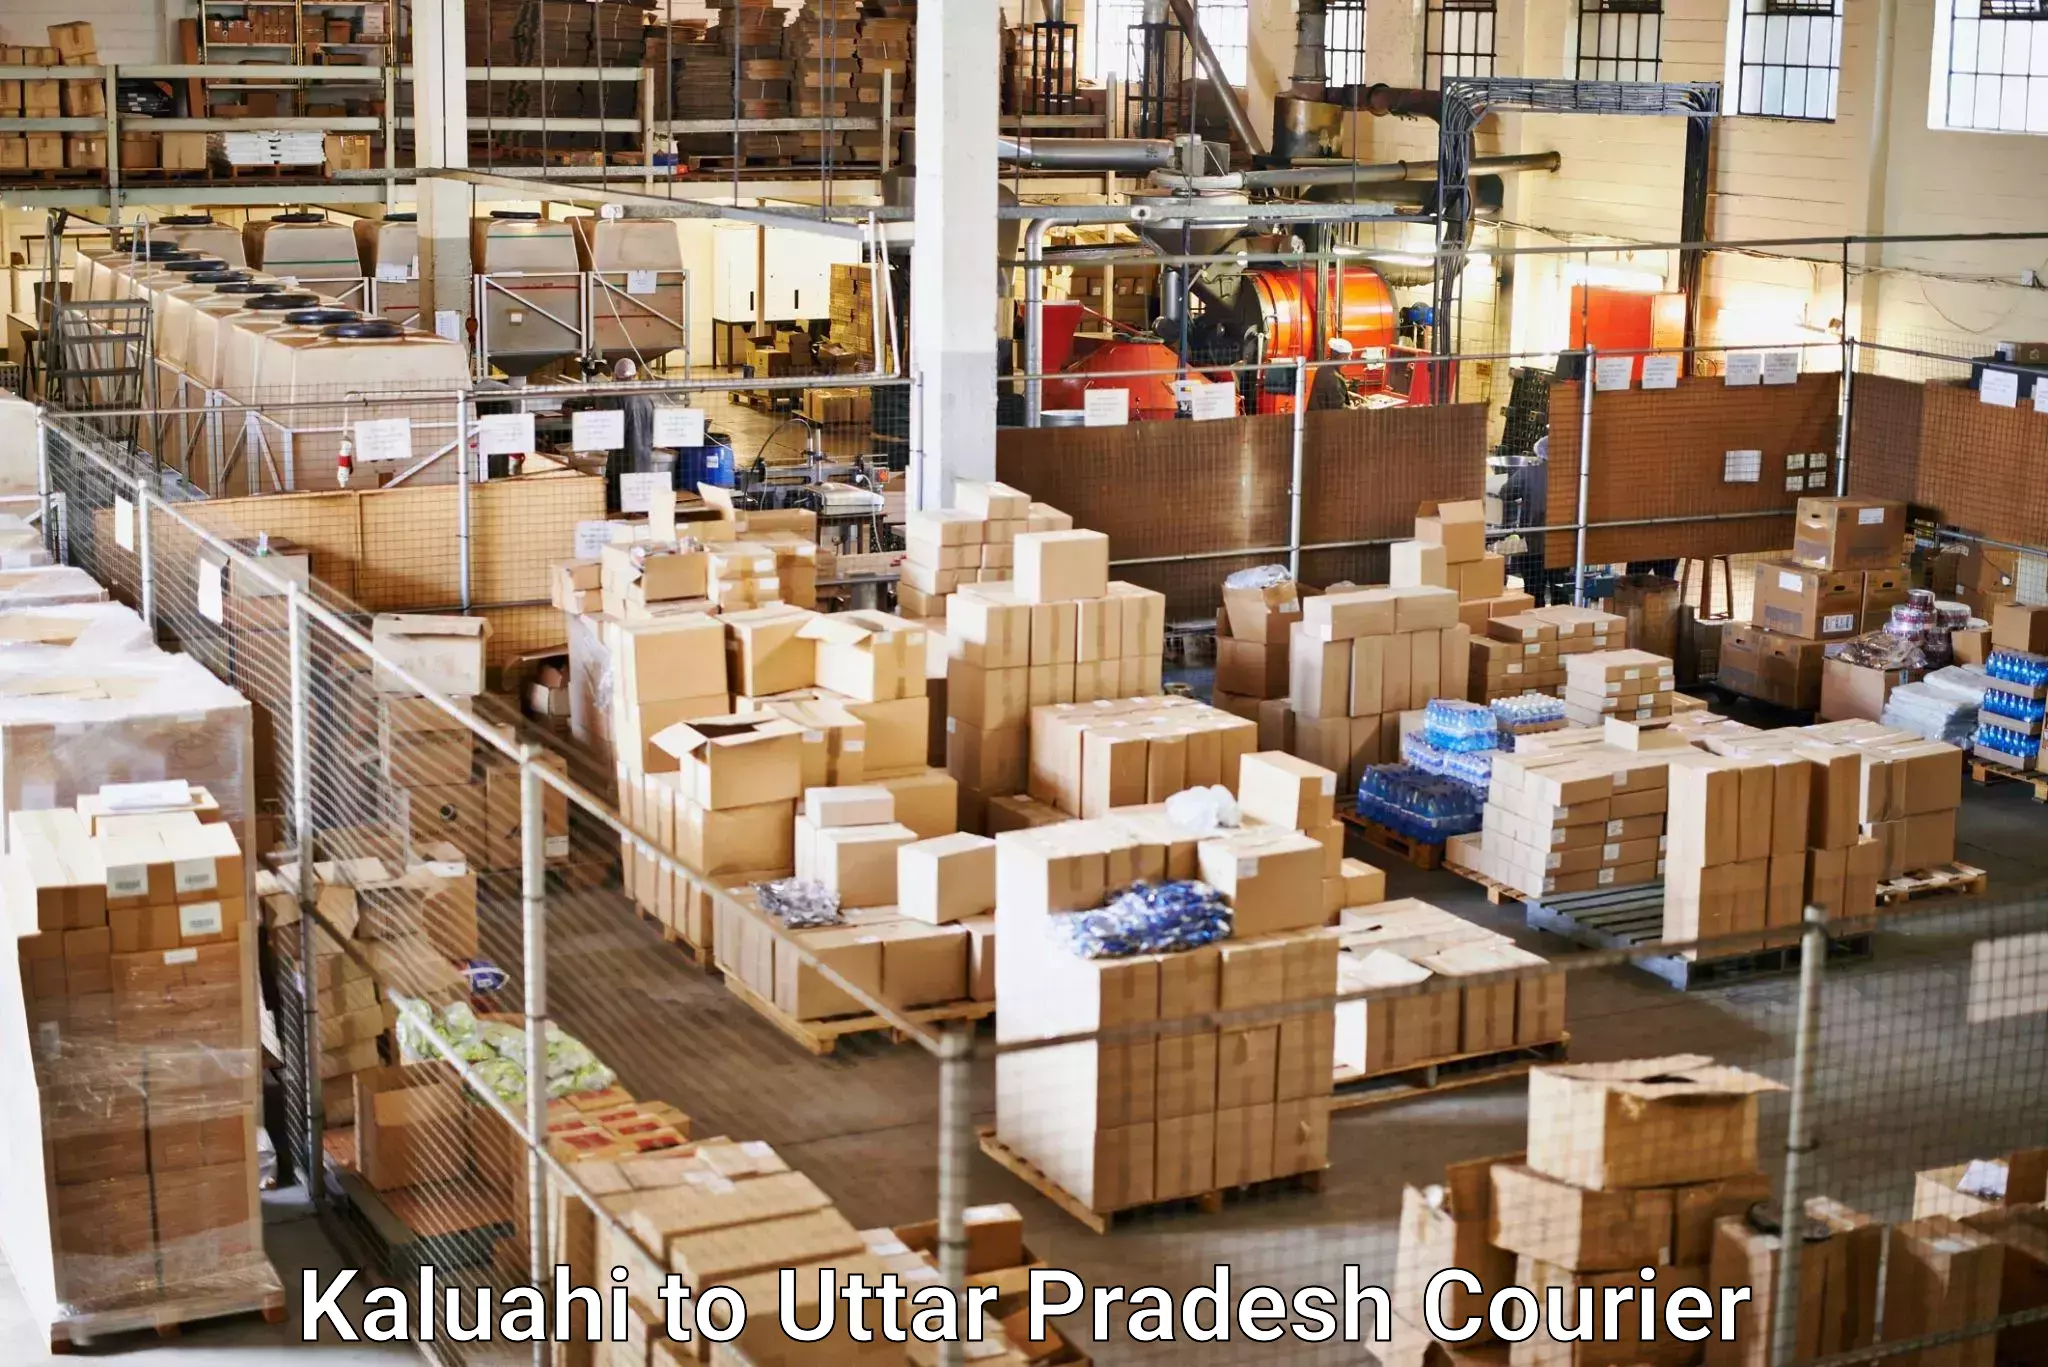 Budget-friendly shipping in Kaluahi to Uttar Pradesh